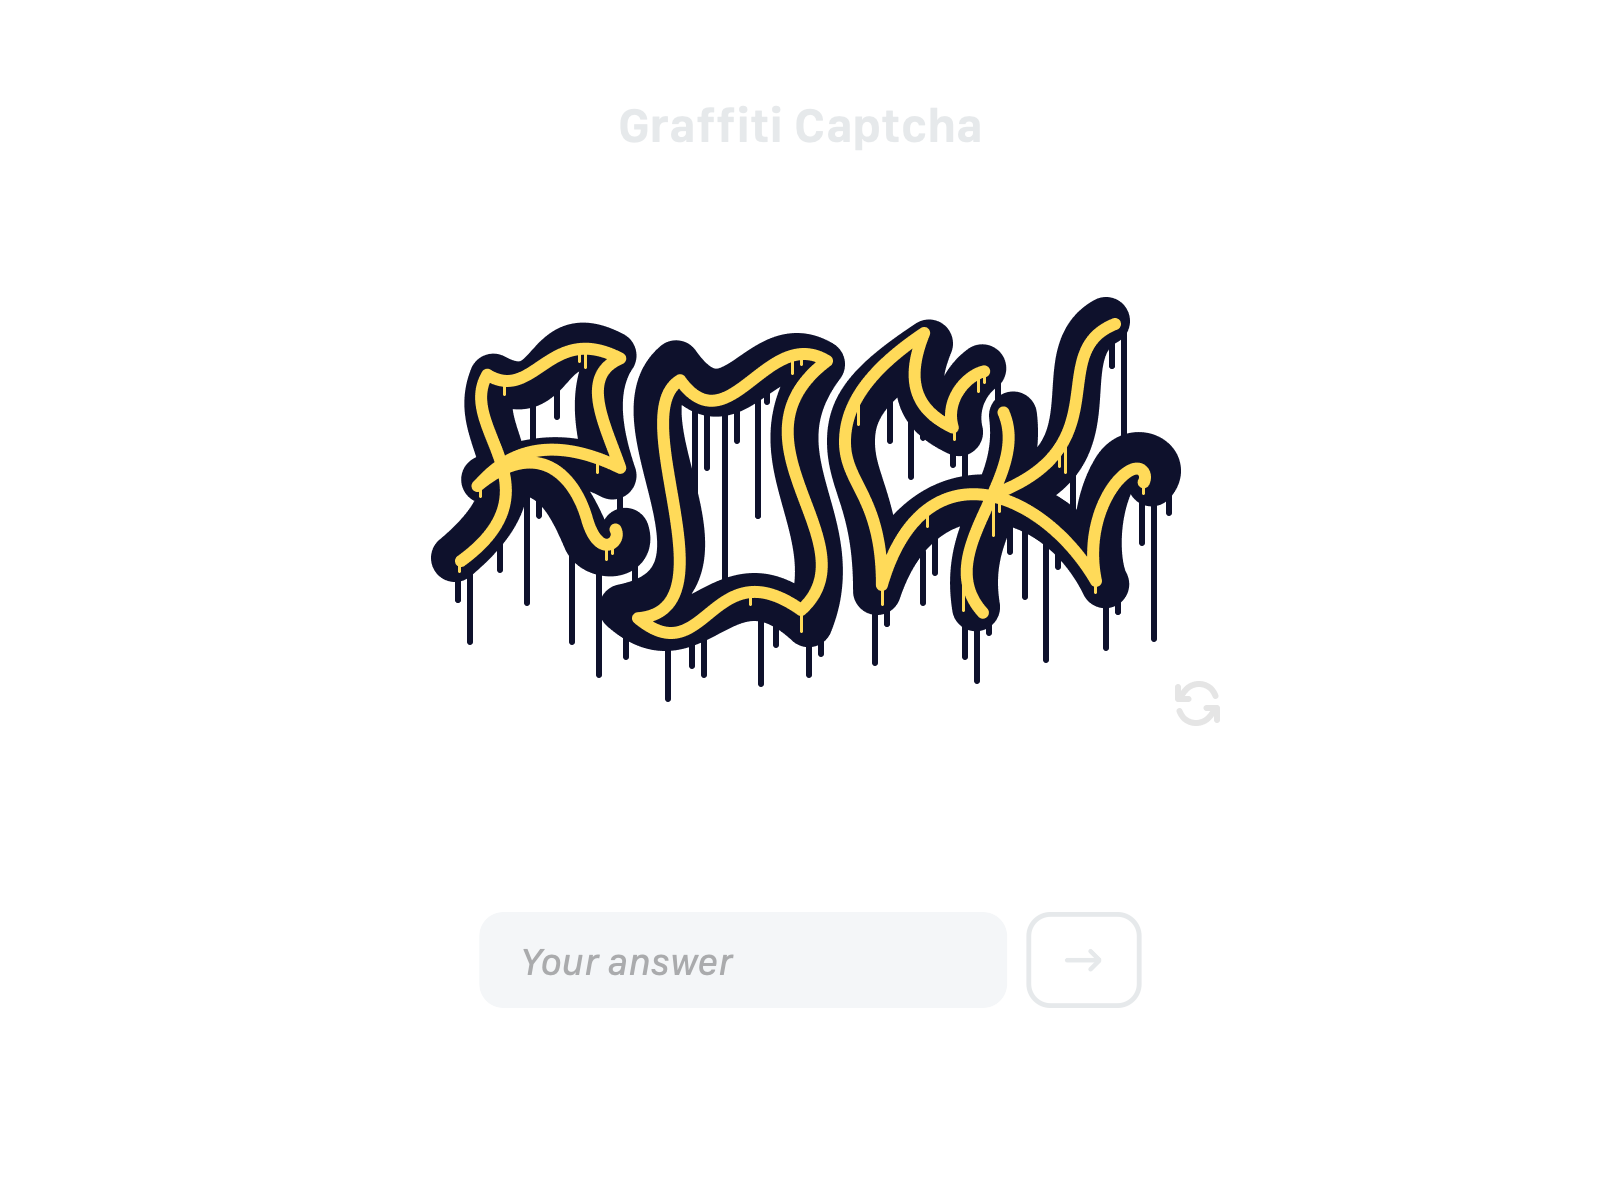 Graffiti Captcha